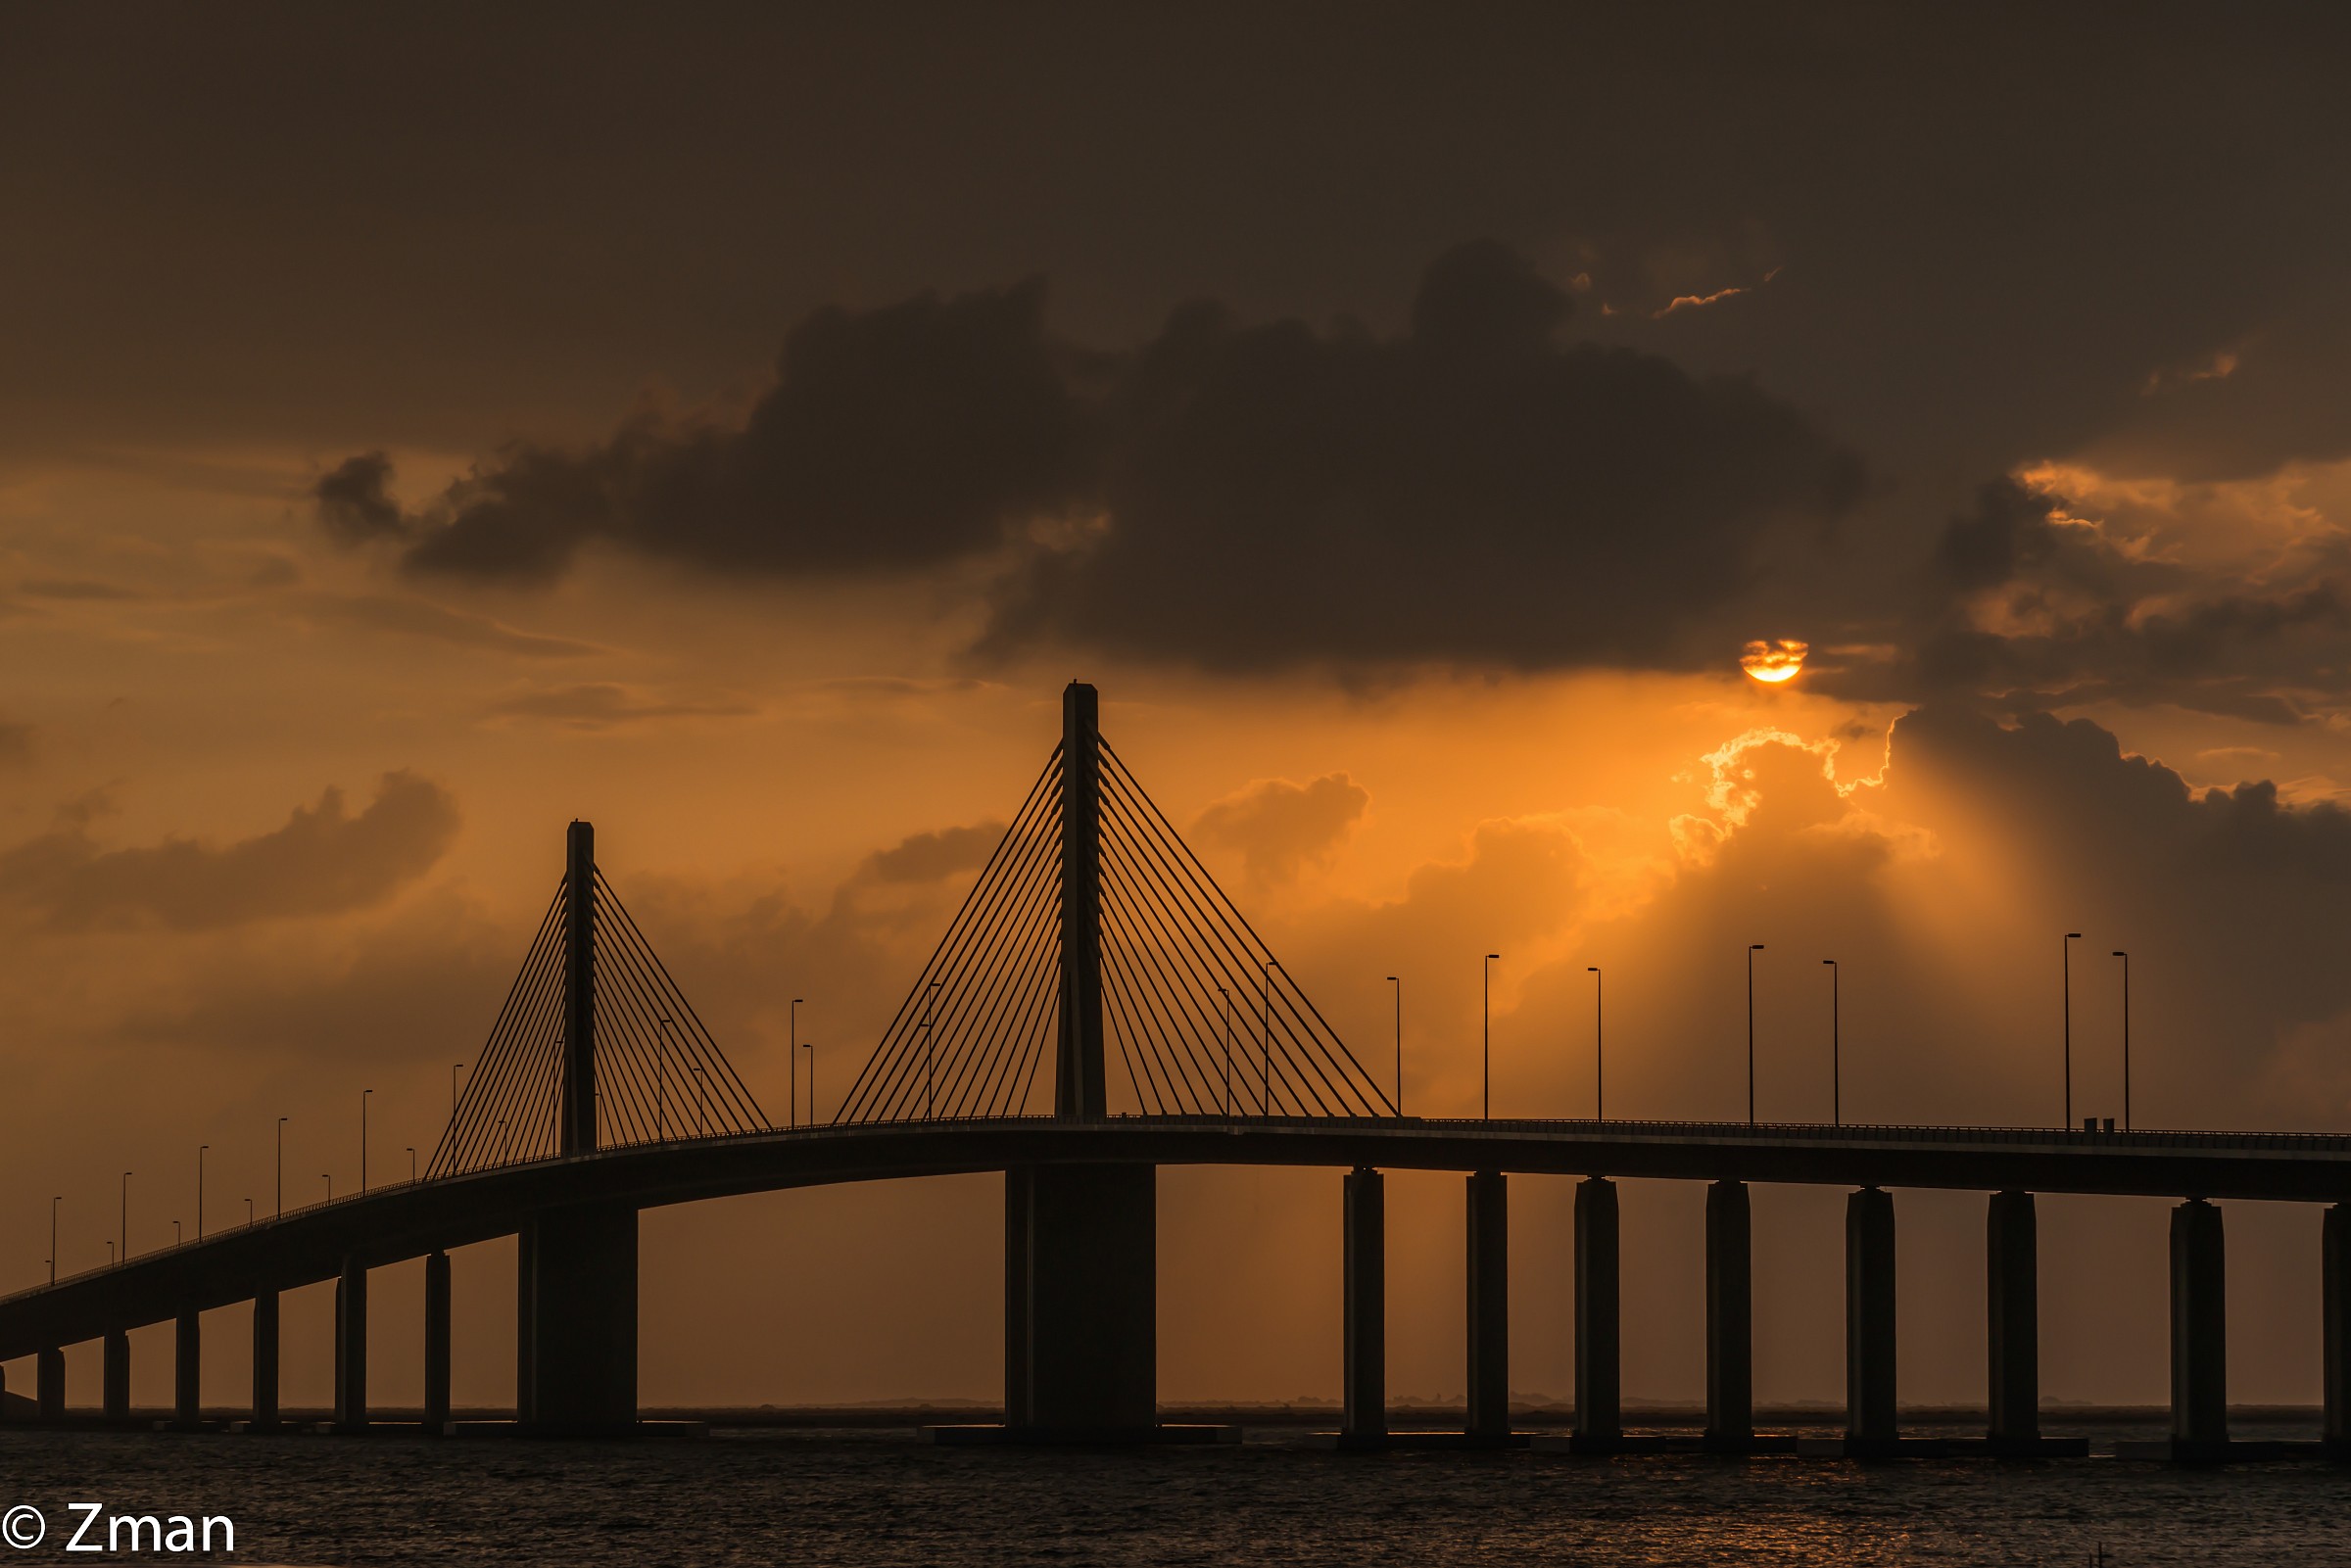 Sunset, Rain and A Bridge...